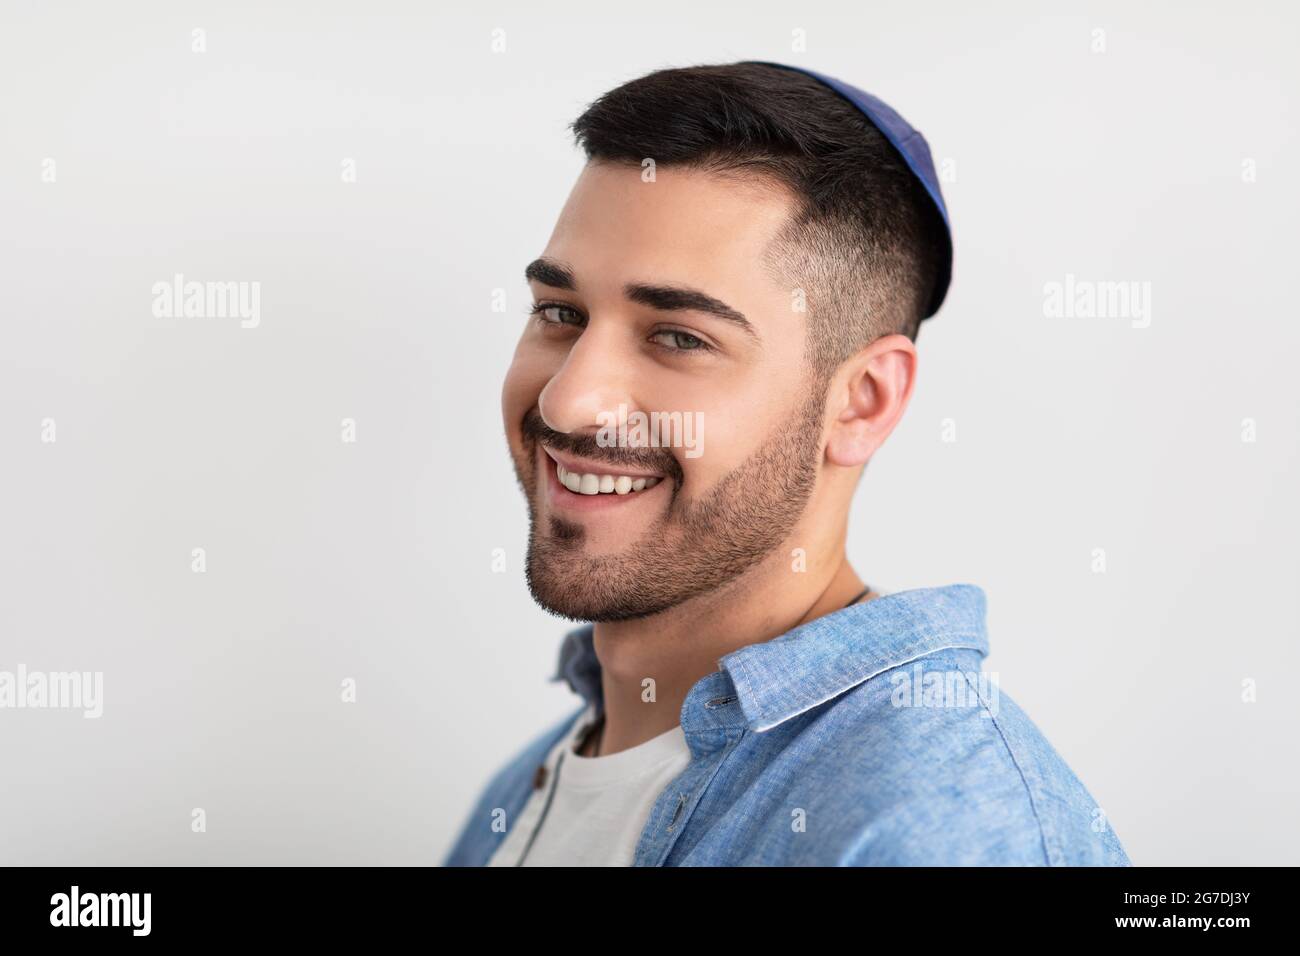 Closeup headshot portrait of smiling jewish man in kippa Stock Photo